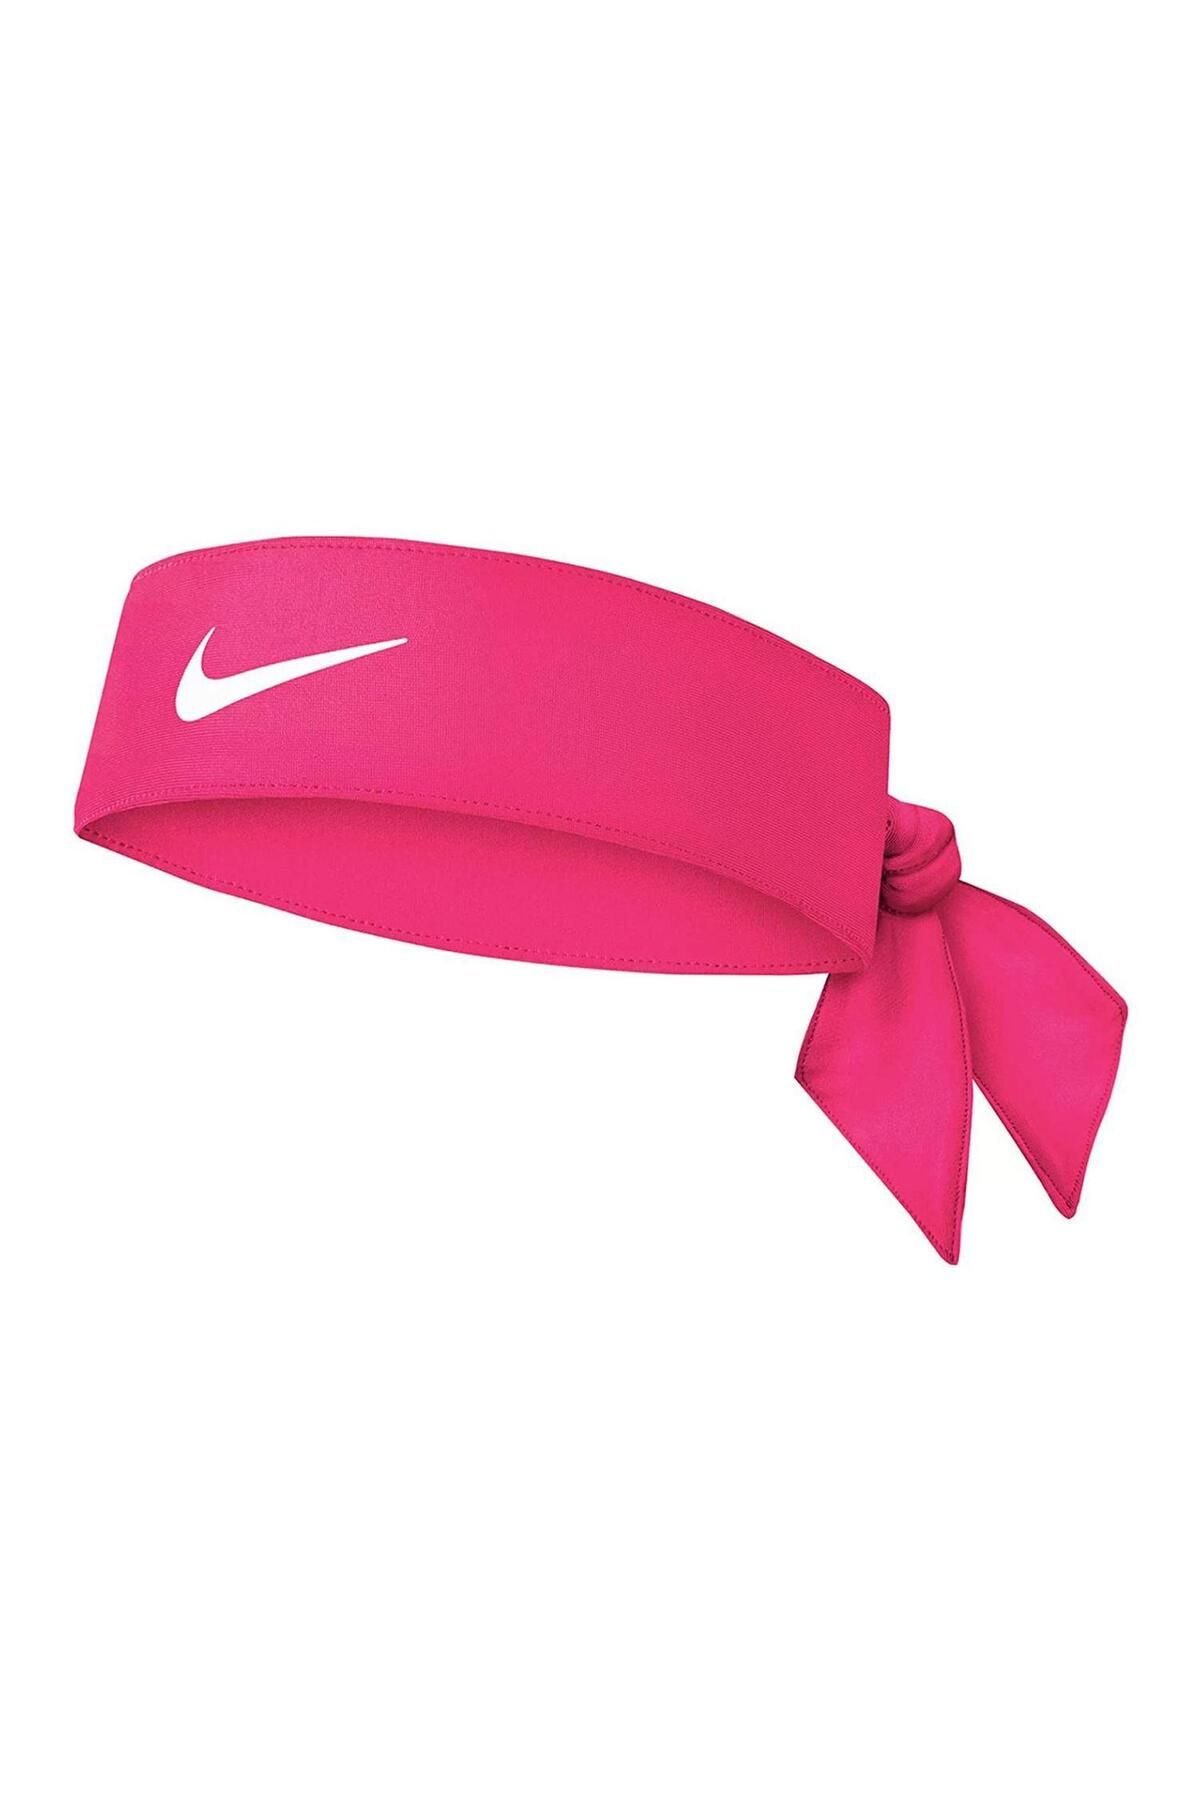 Nike Dri-fit Head Tie 4.0 Antrenman Saç Bandı